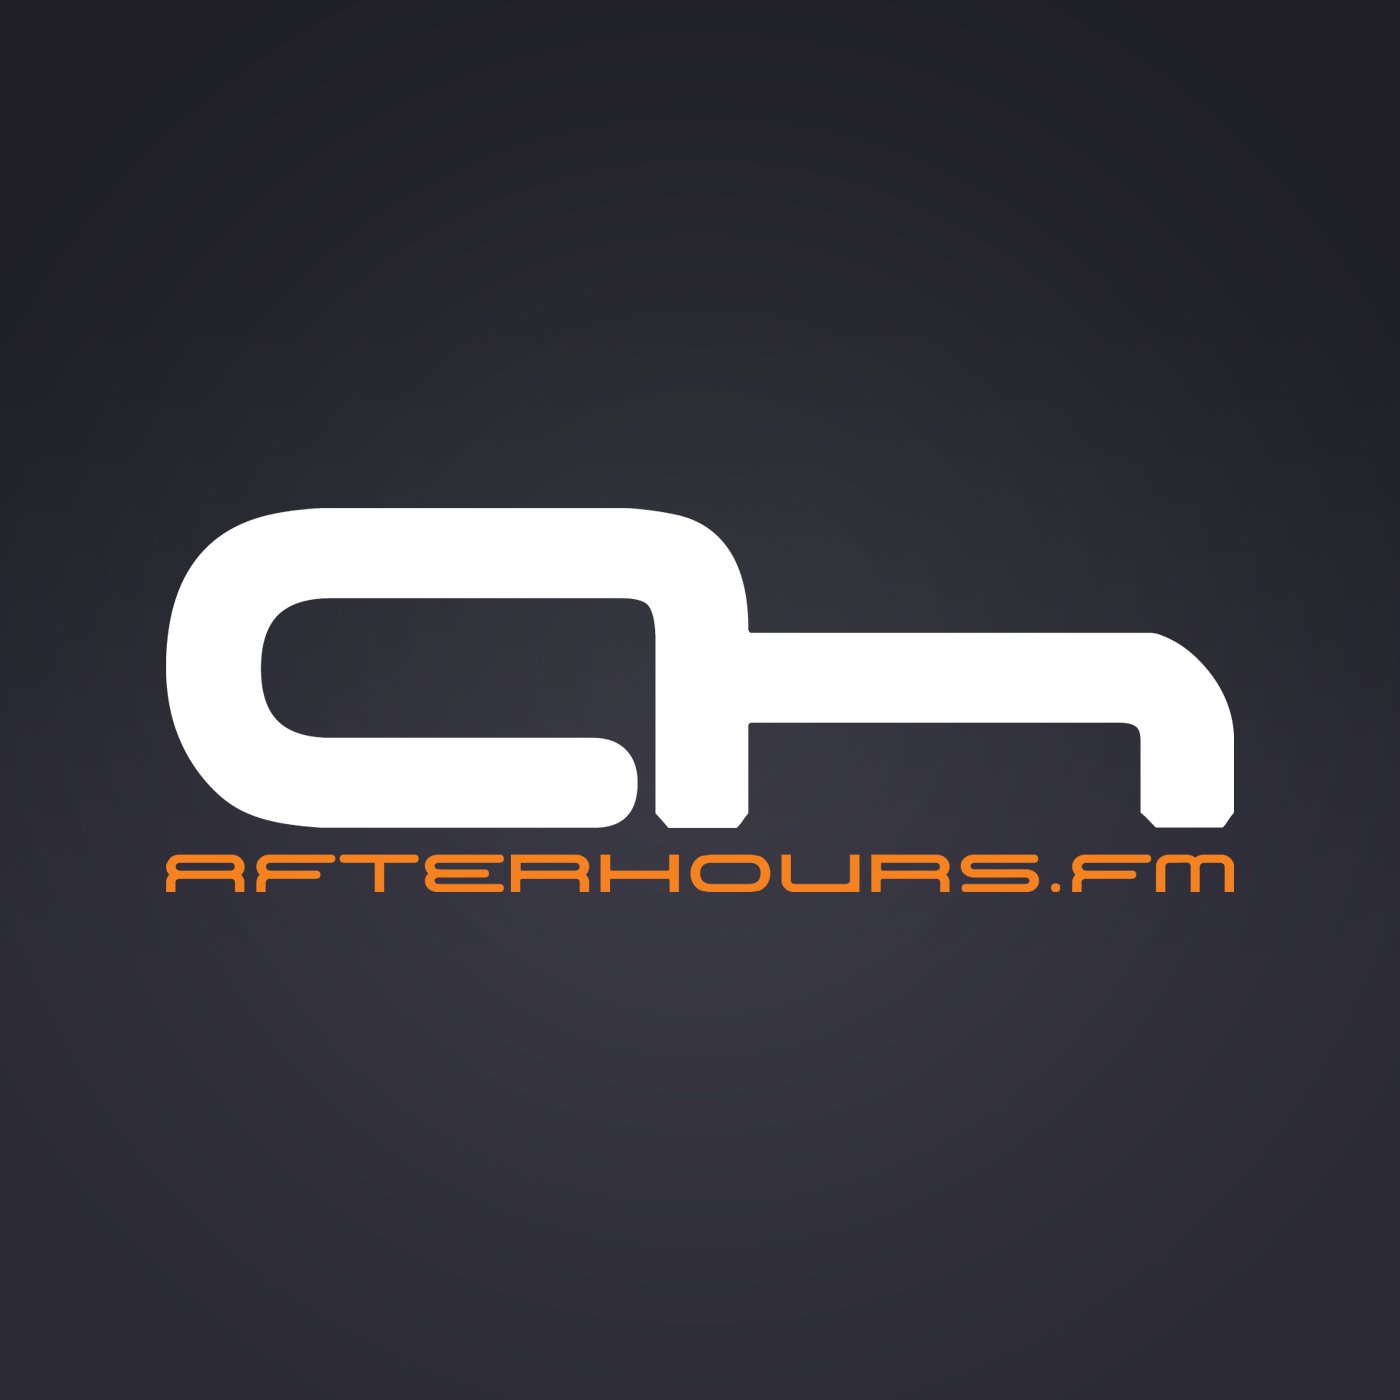 AH.FM - Electronic Dance Music Radio